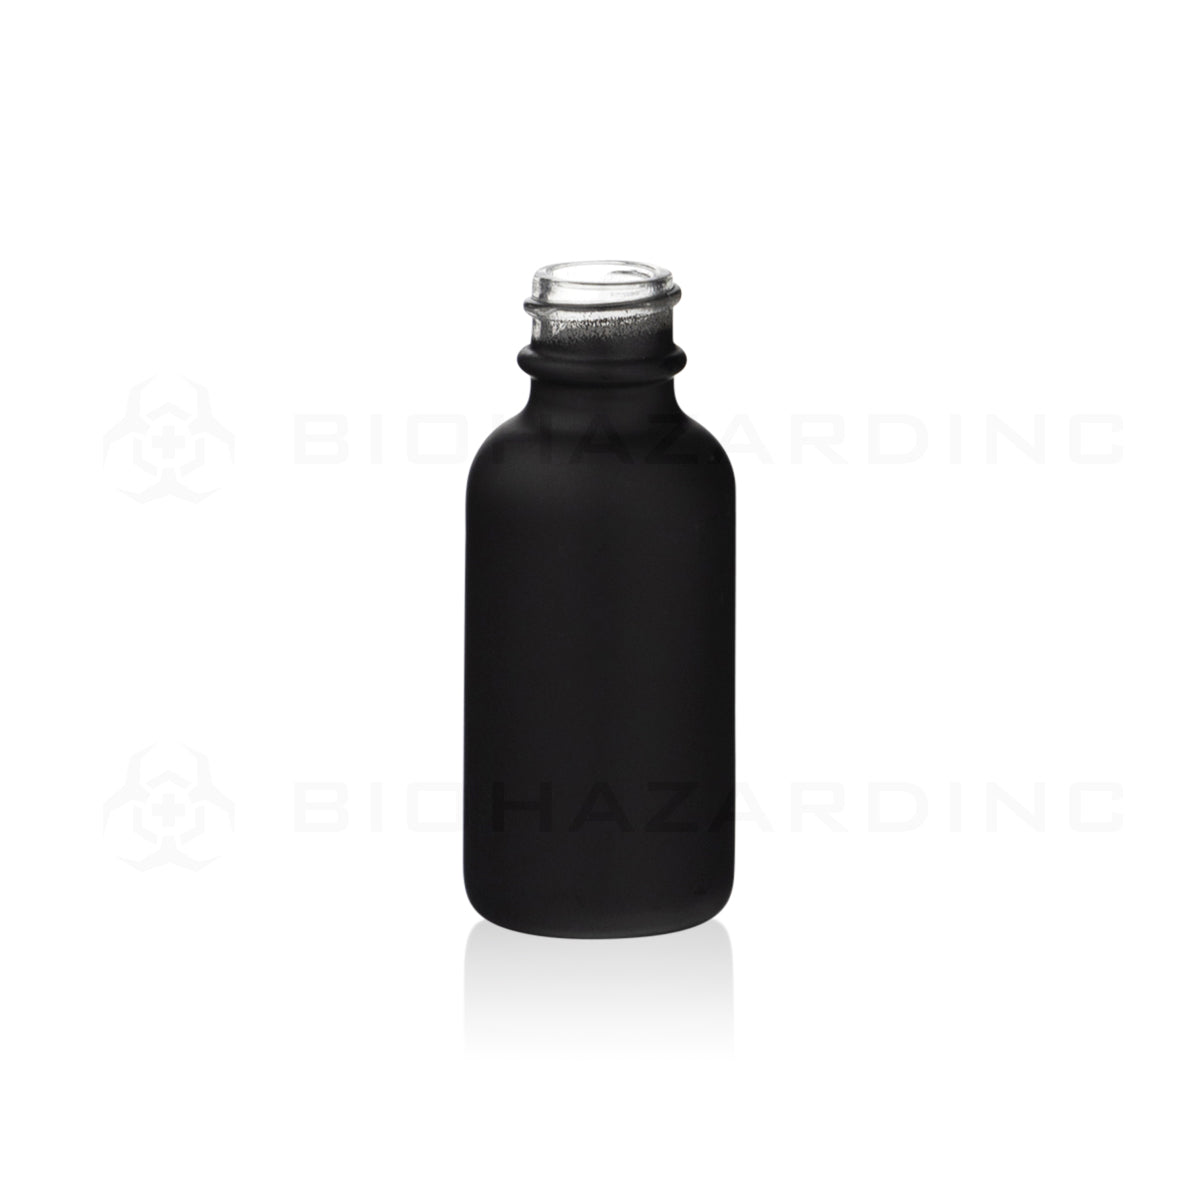 Glass Bottle | Boston Round Glass Bottles Opaque Black | 20mm - 1oz - 120 Count Glass bottles Biohazard Inc   